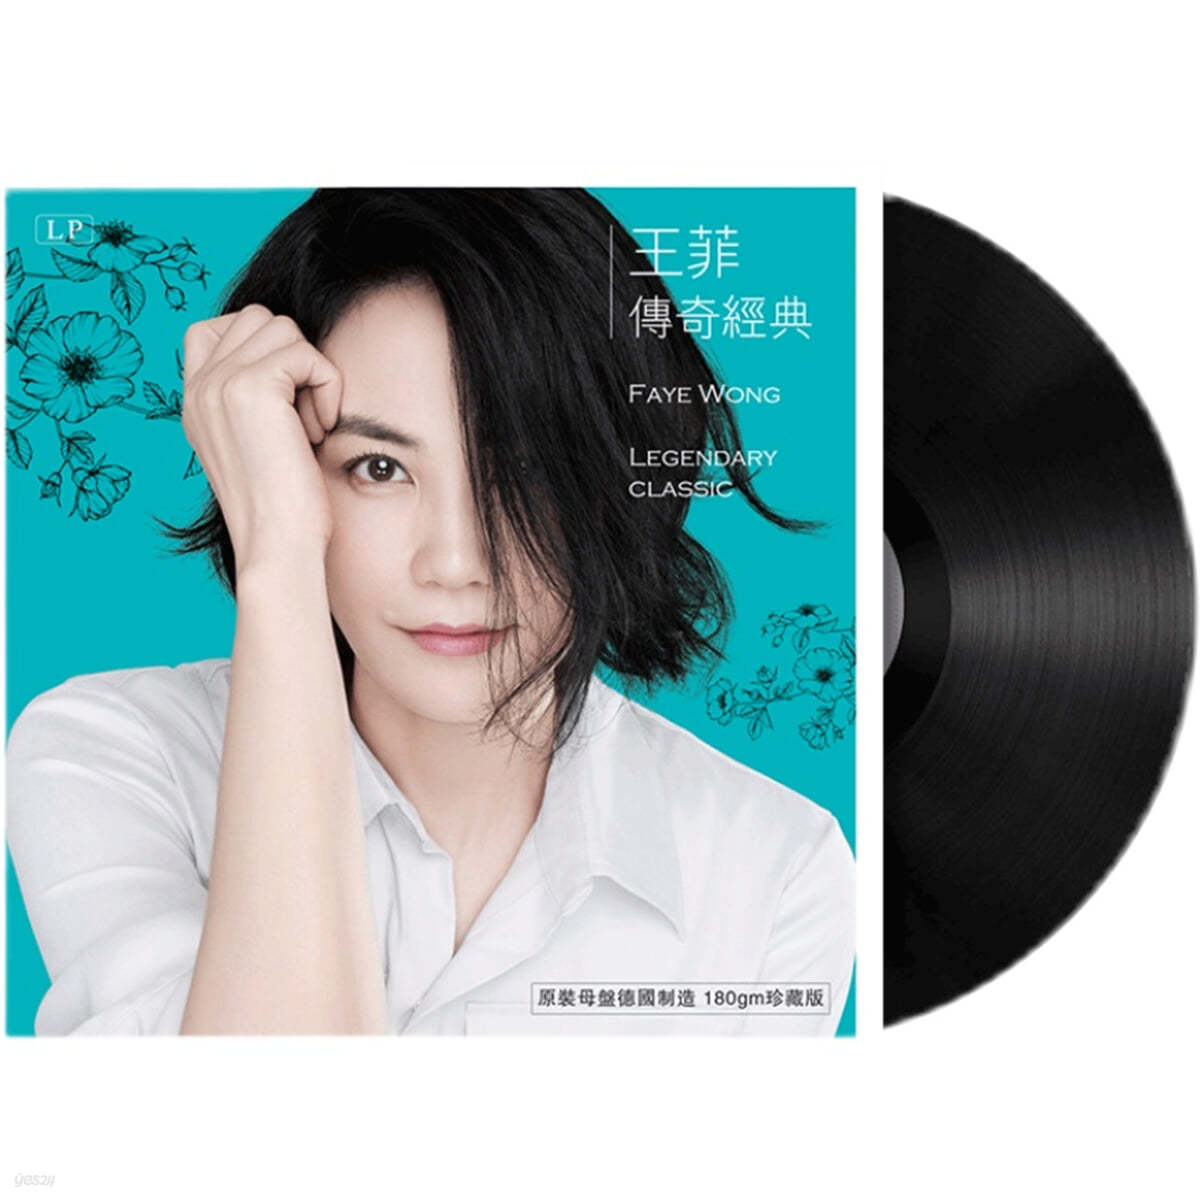 Wong Faye (왕비) - 전기경곡 [LP] 